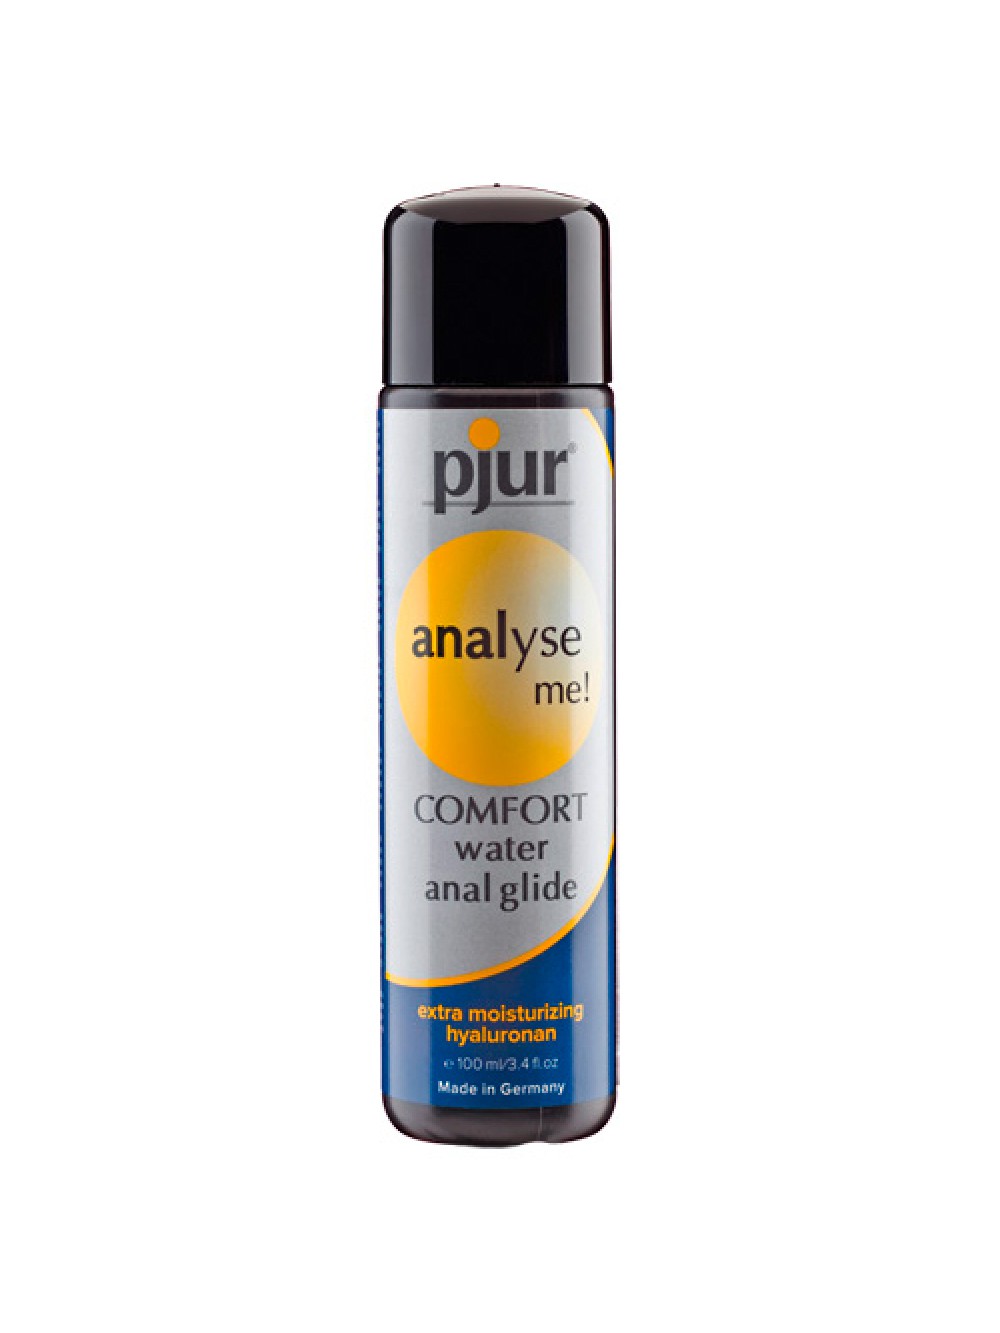 pjur® analyse me! Comfort Water Anal Glide 827160110130